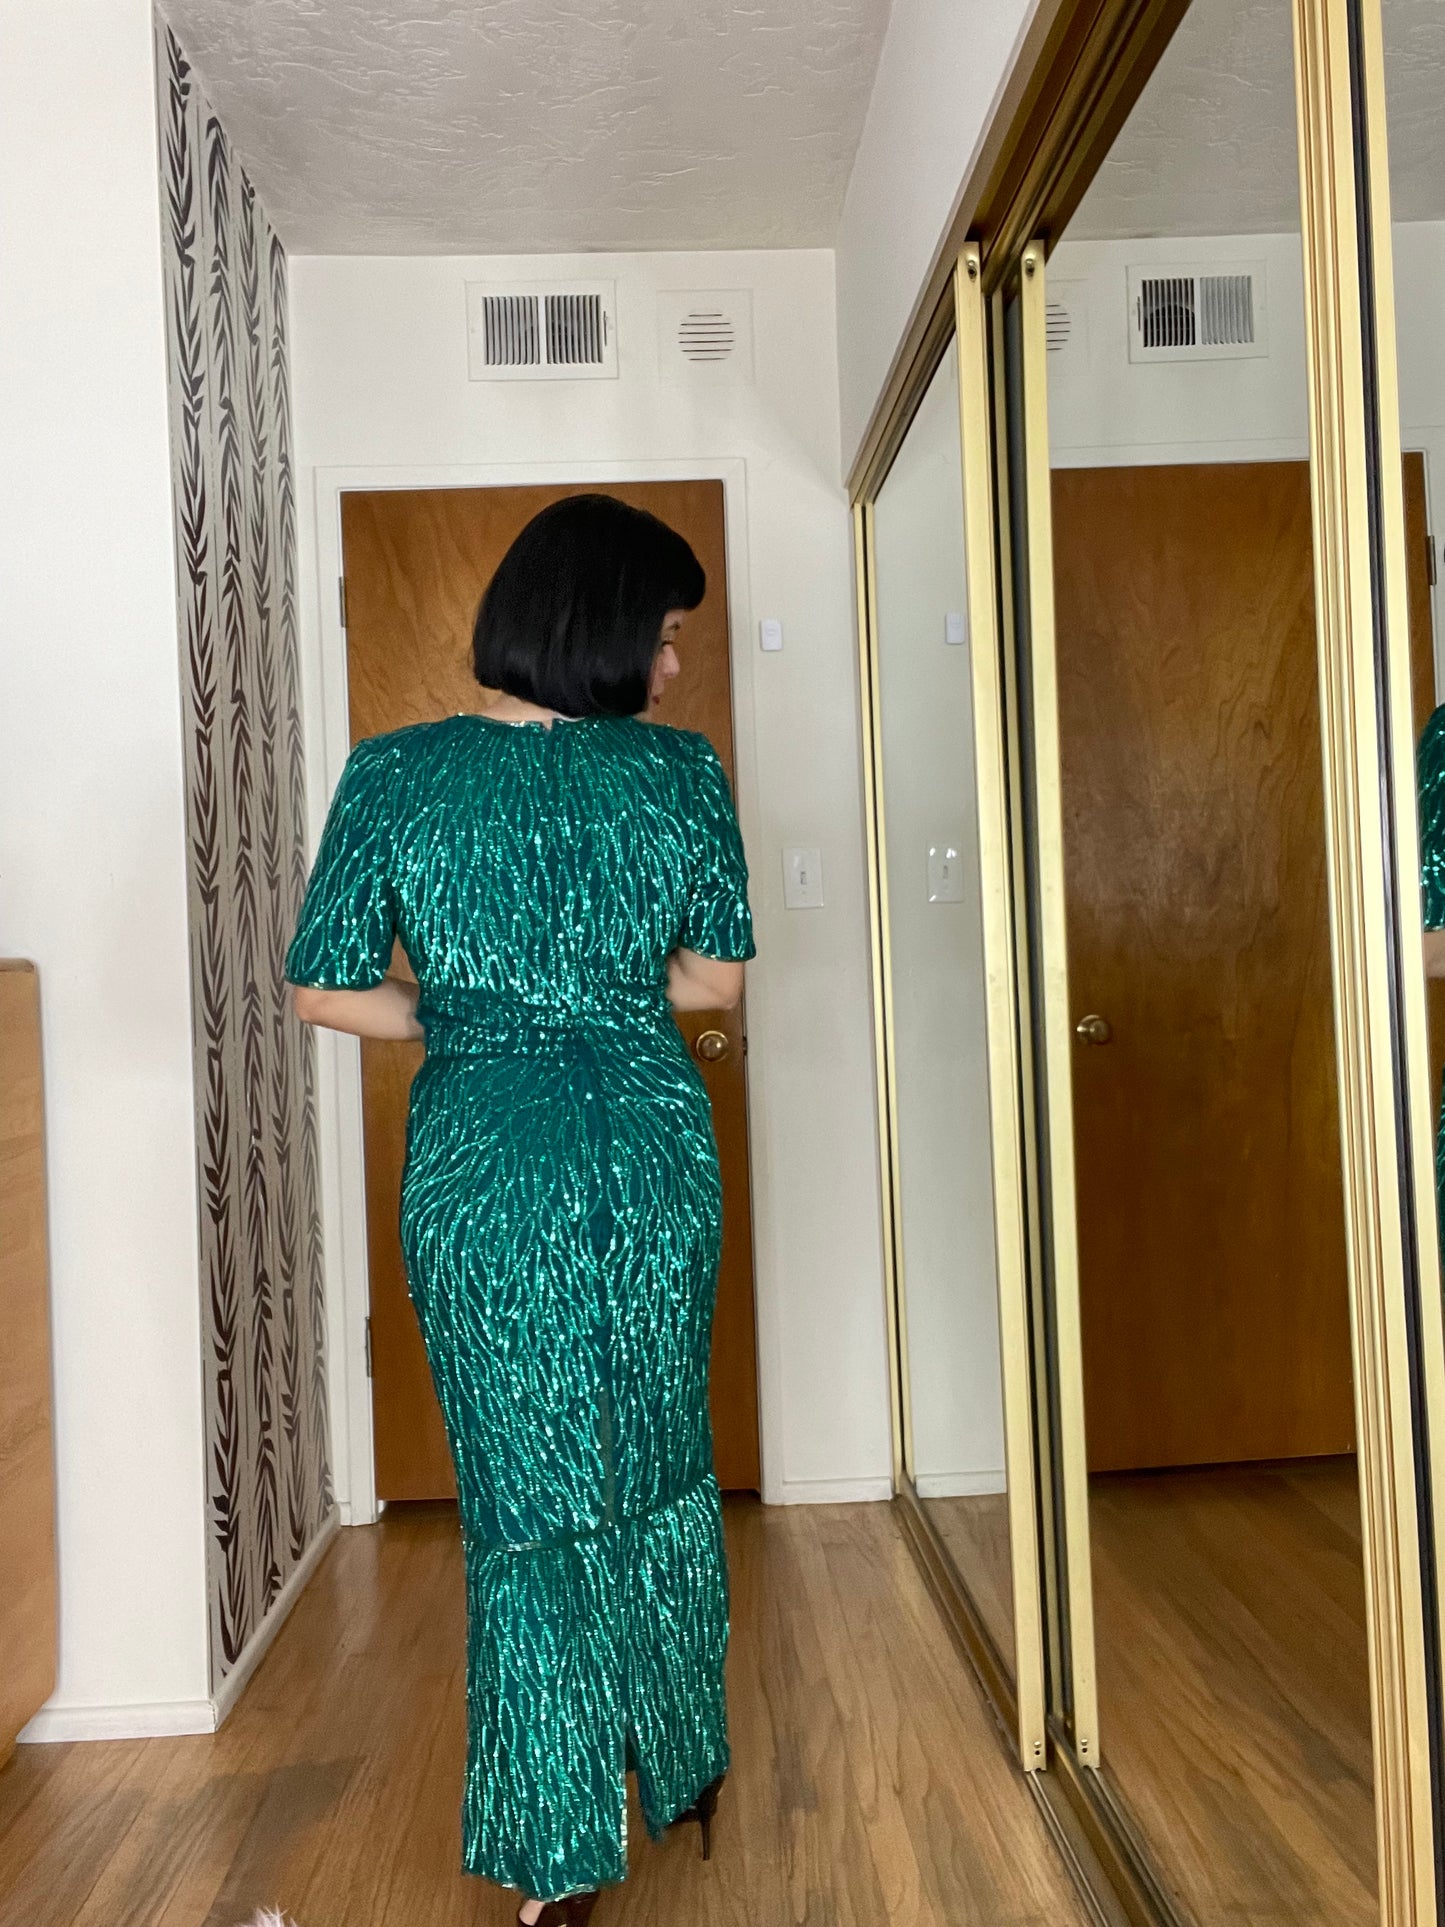 Vintage 60s “Laurence Kagar” Emerald City Green Sequins Dress Best Fits Sizes S-M